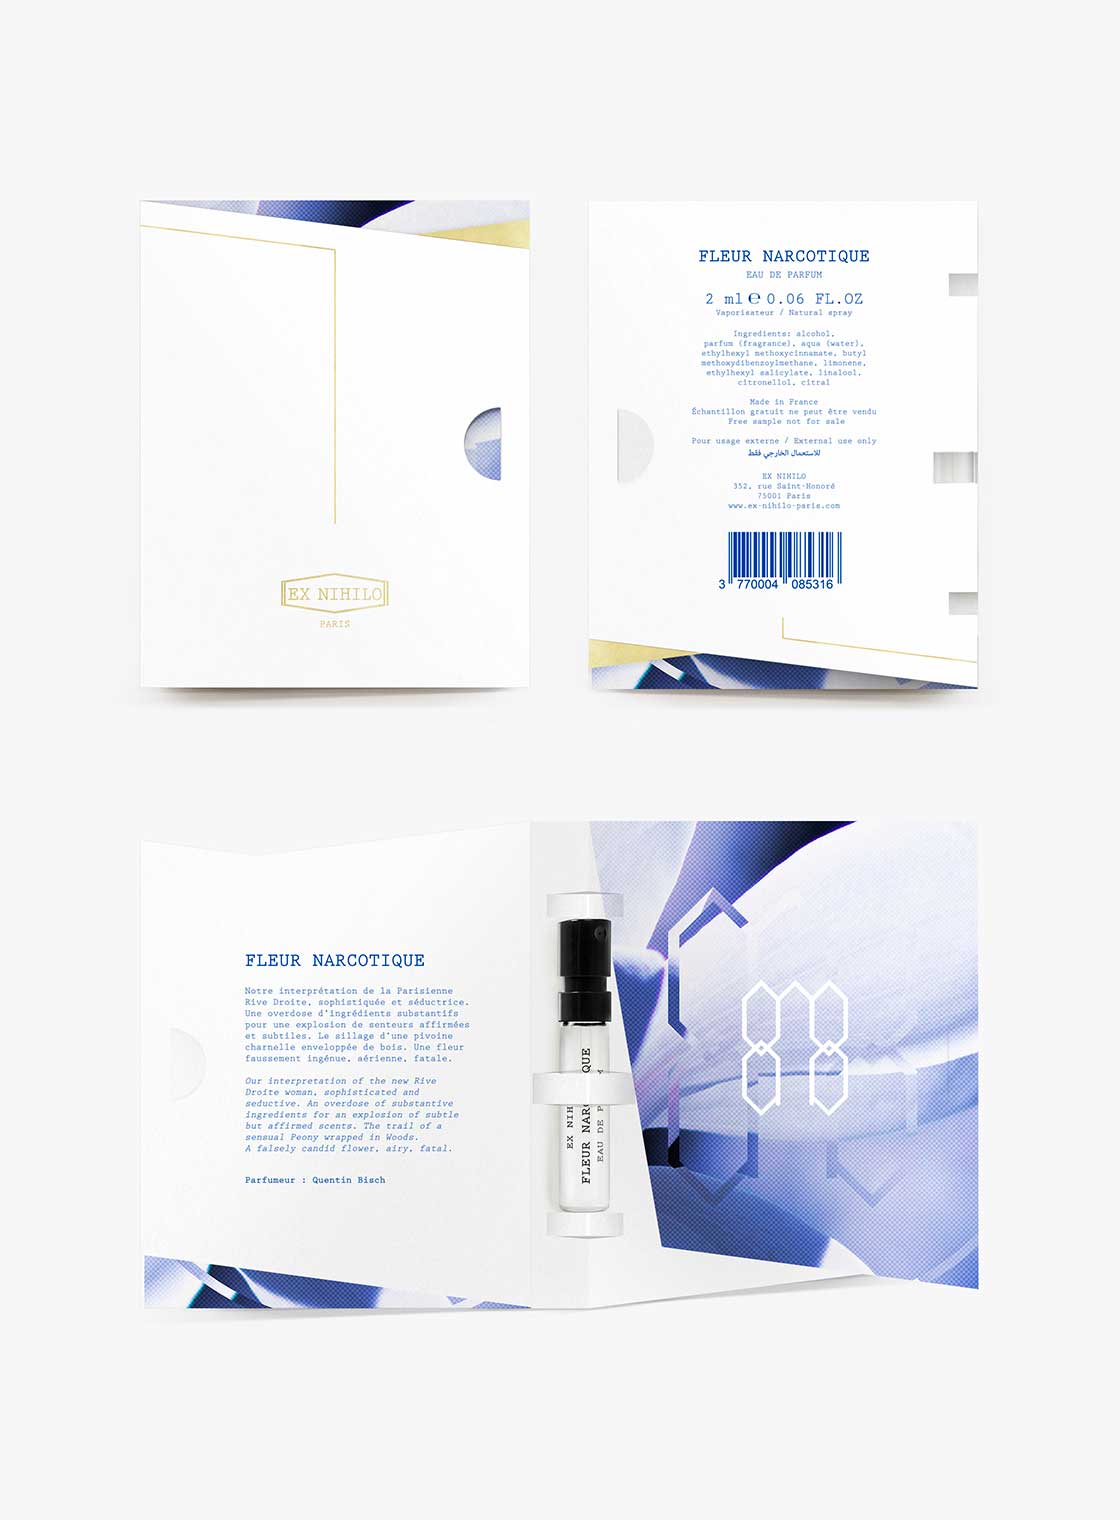 Luxury perfume samples - Discovery Kit